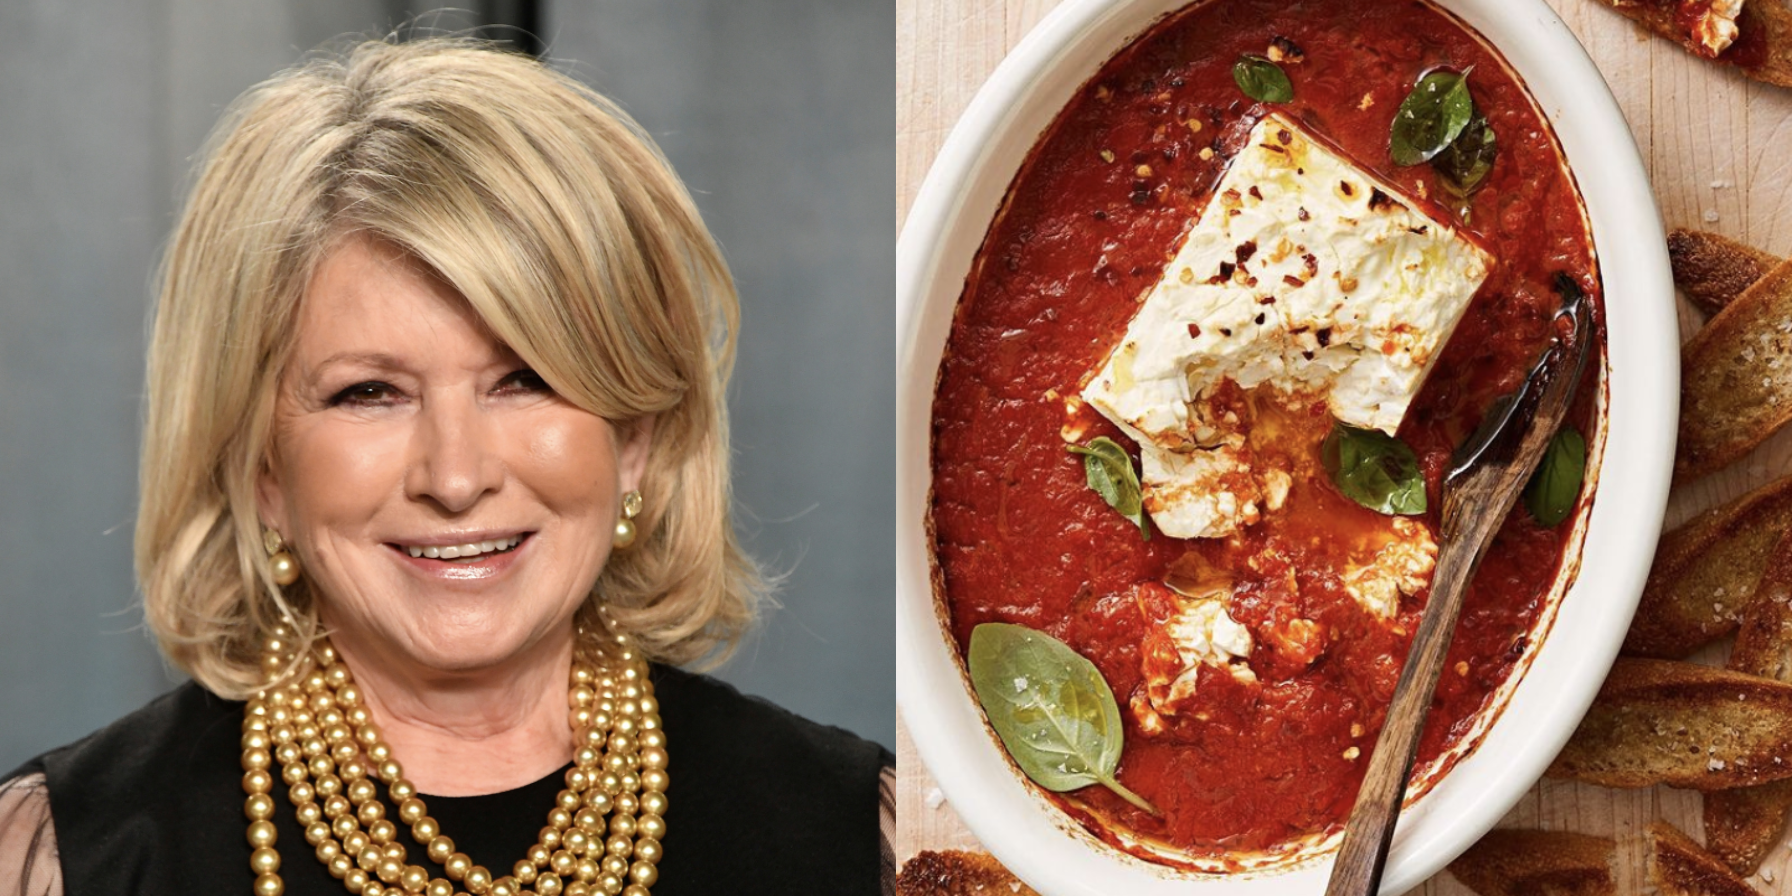 Martha Stewart Shared Her Version Of The Viral Baked Feta Pasta